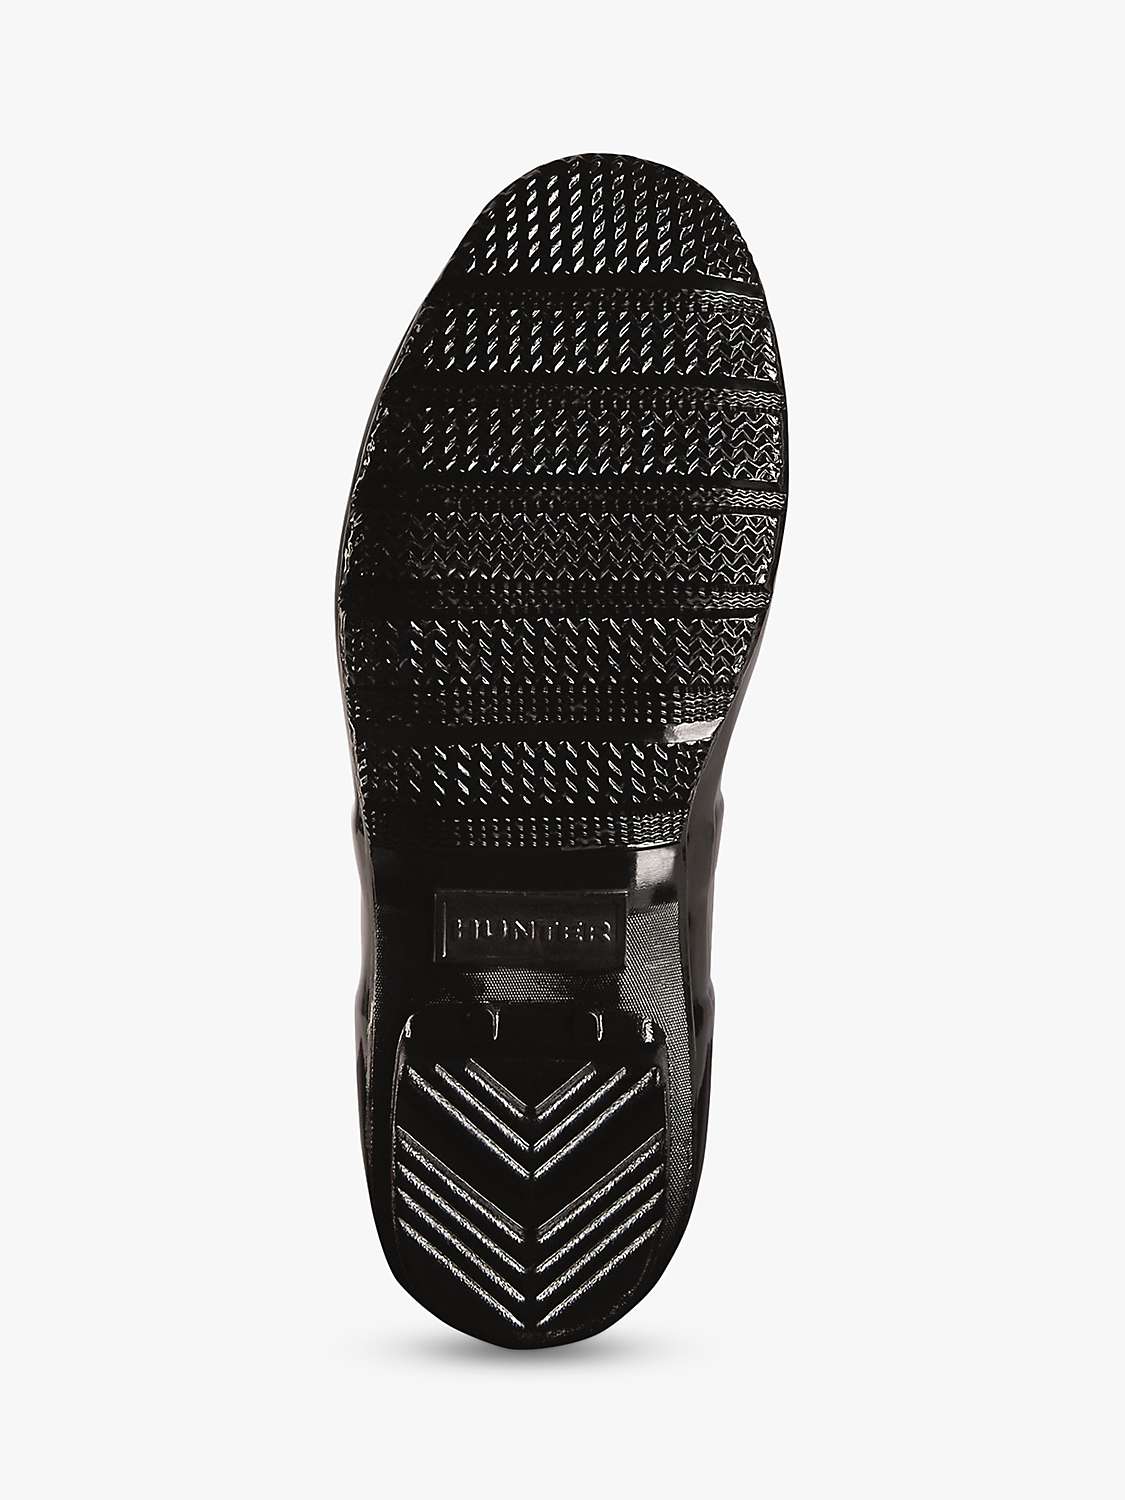 Buy Hunter Tall Back Adjustable Gloss Wellington Boots, Black Online at johnlewis.com